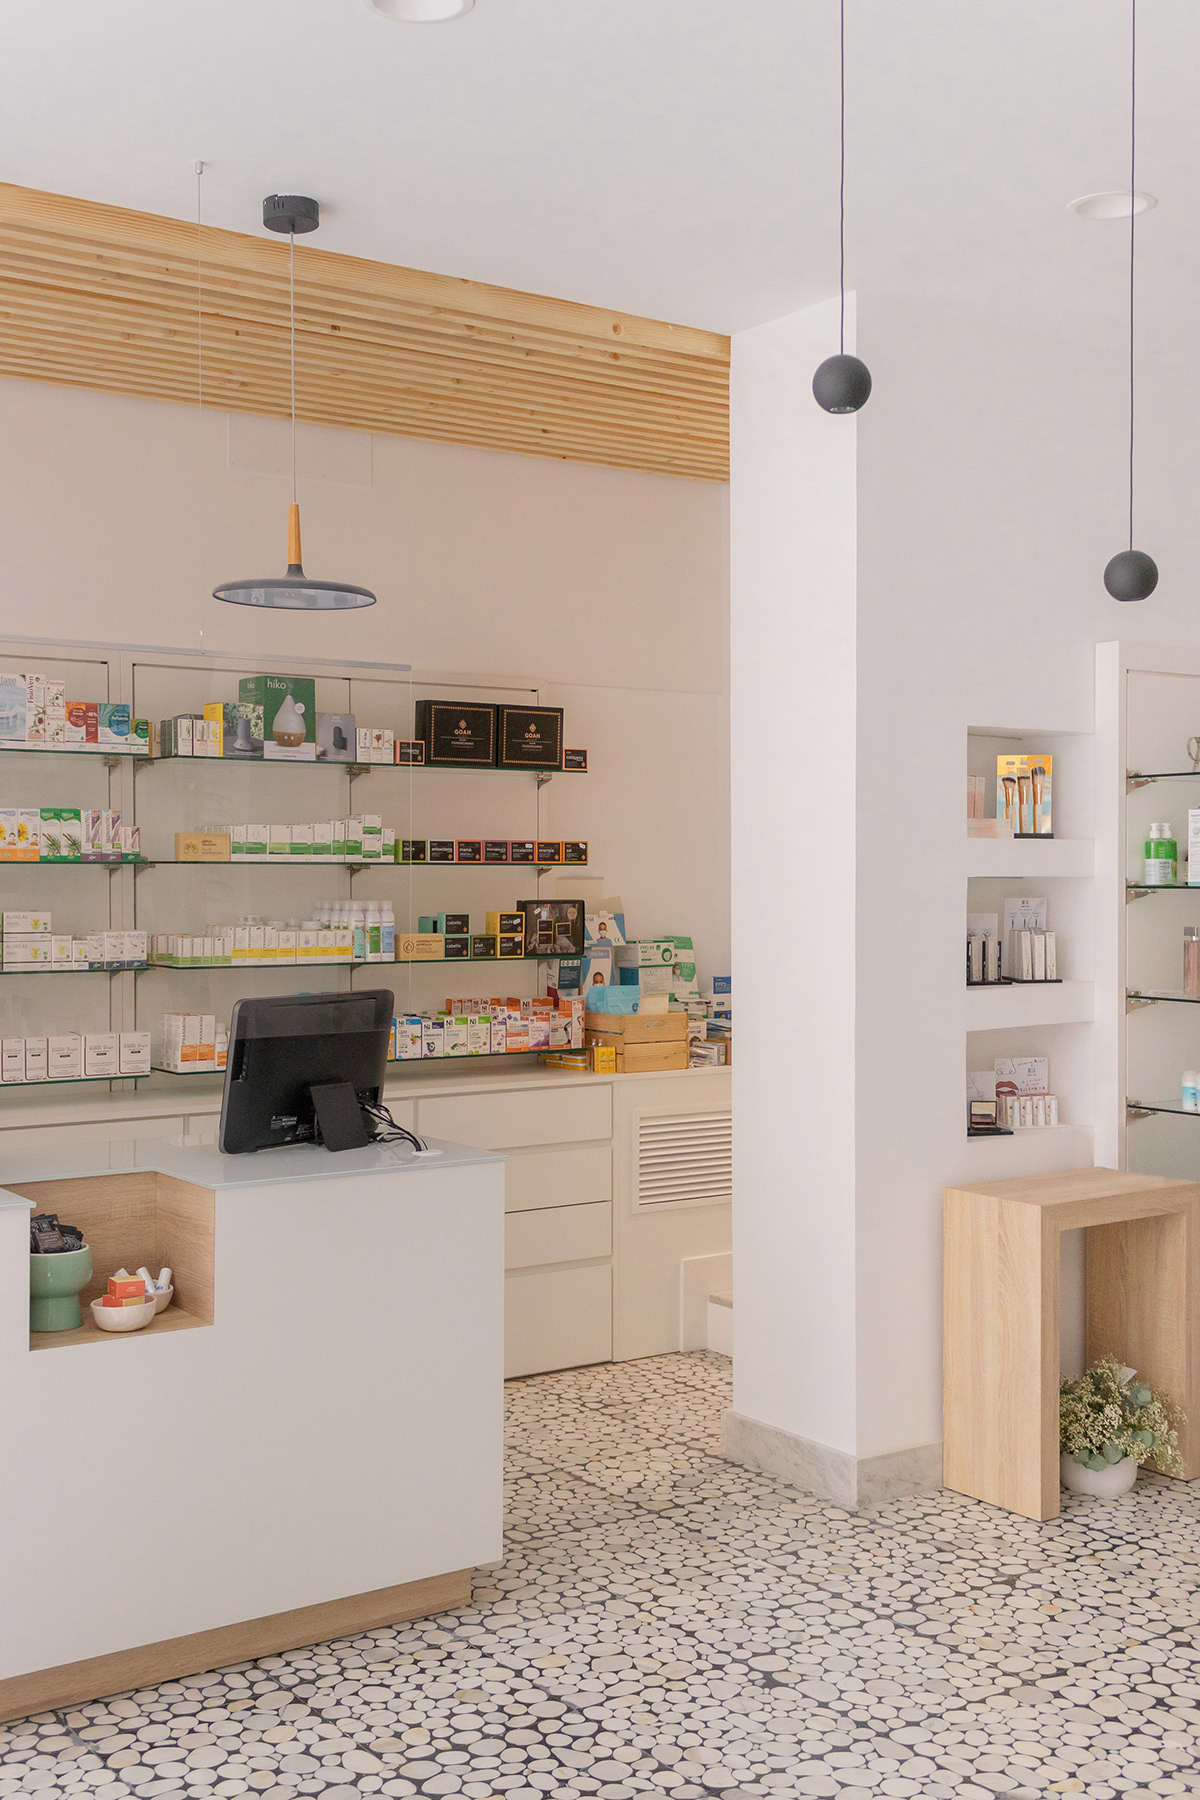 arquitectura farmacia reforma refurnishment architecture diseño interior interior design  pharmacy